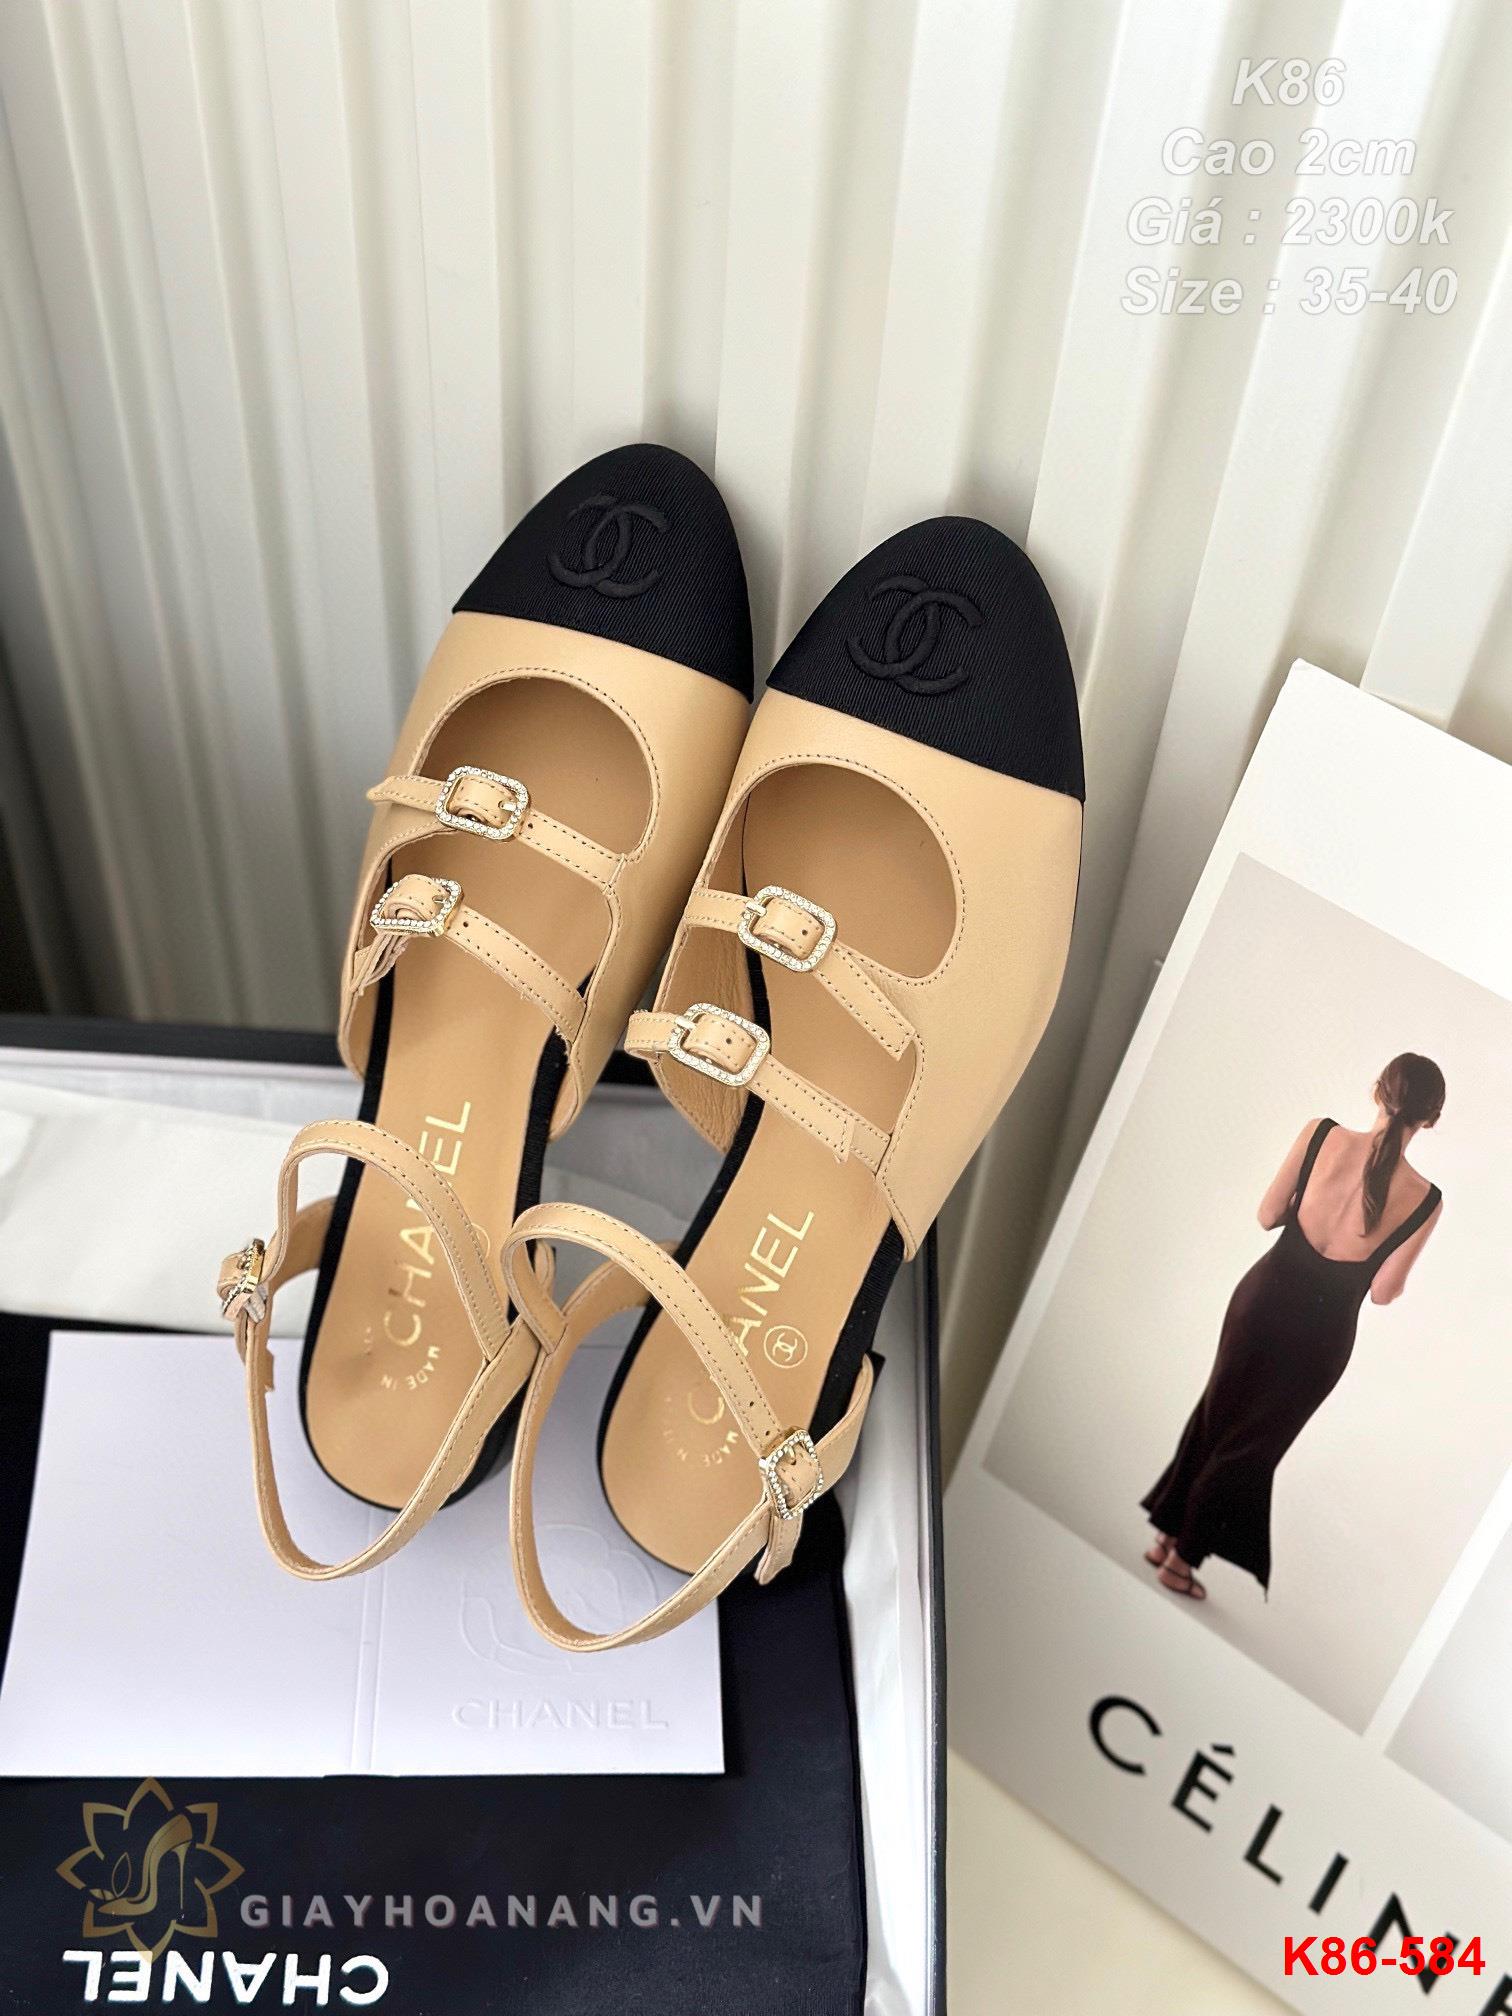 K86-584 Chanel sandal cao 2cm siêu cấp